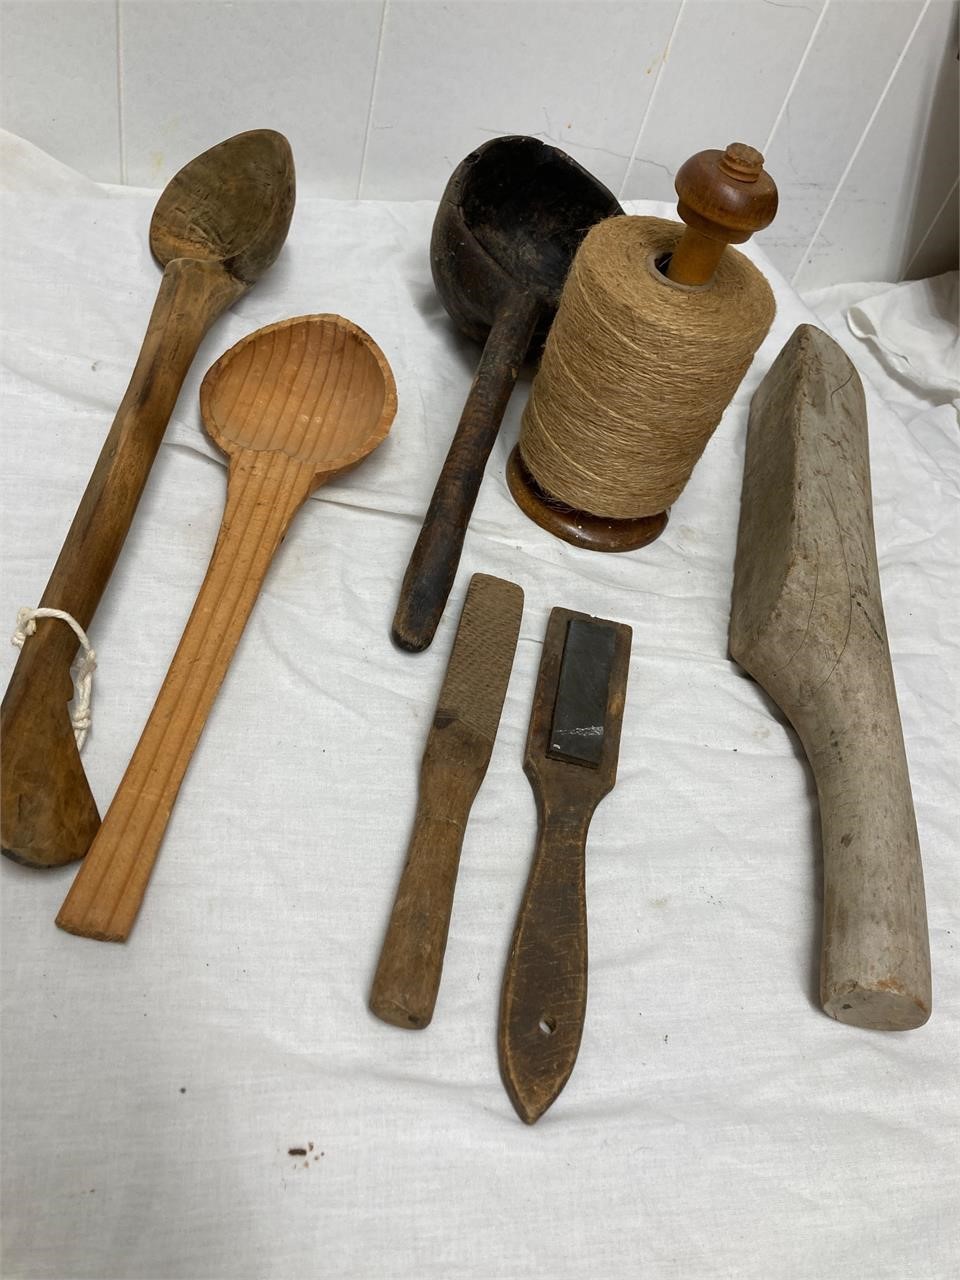 Wood paddles and tools.